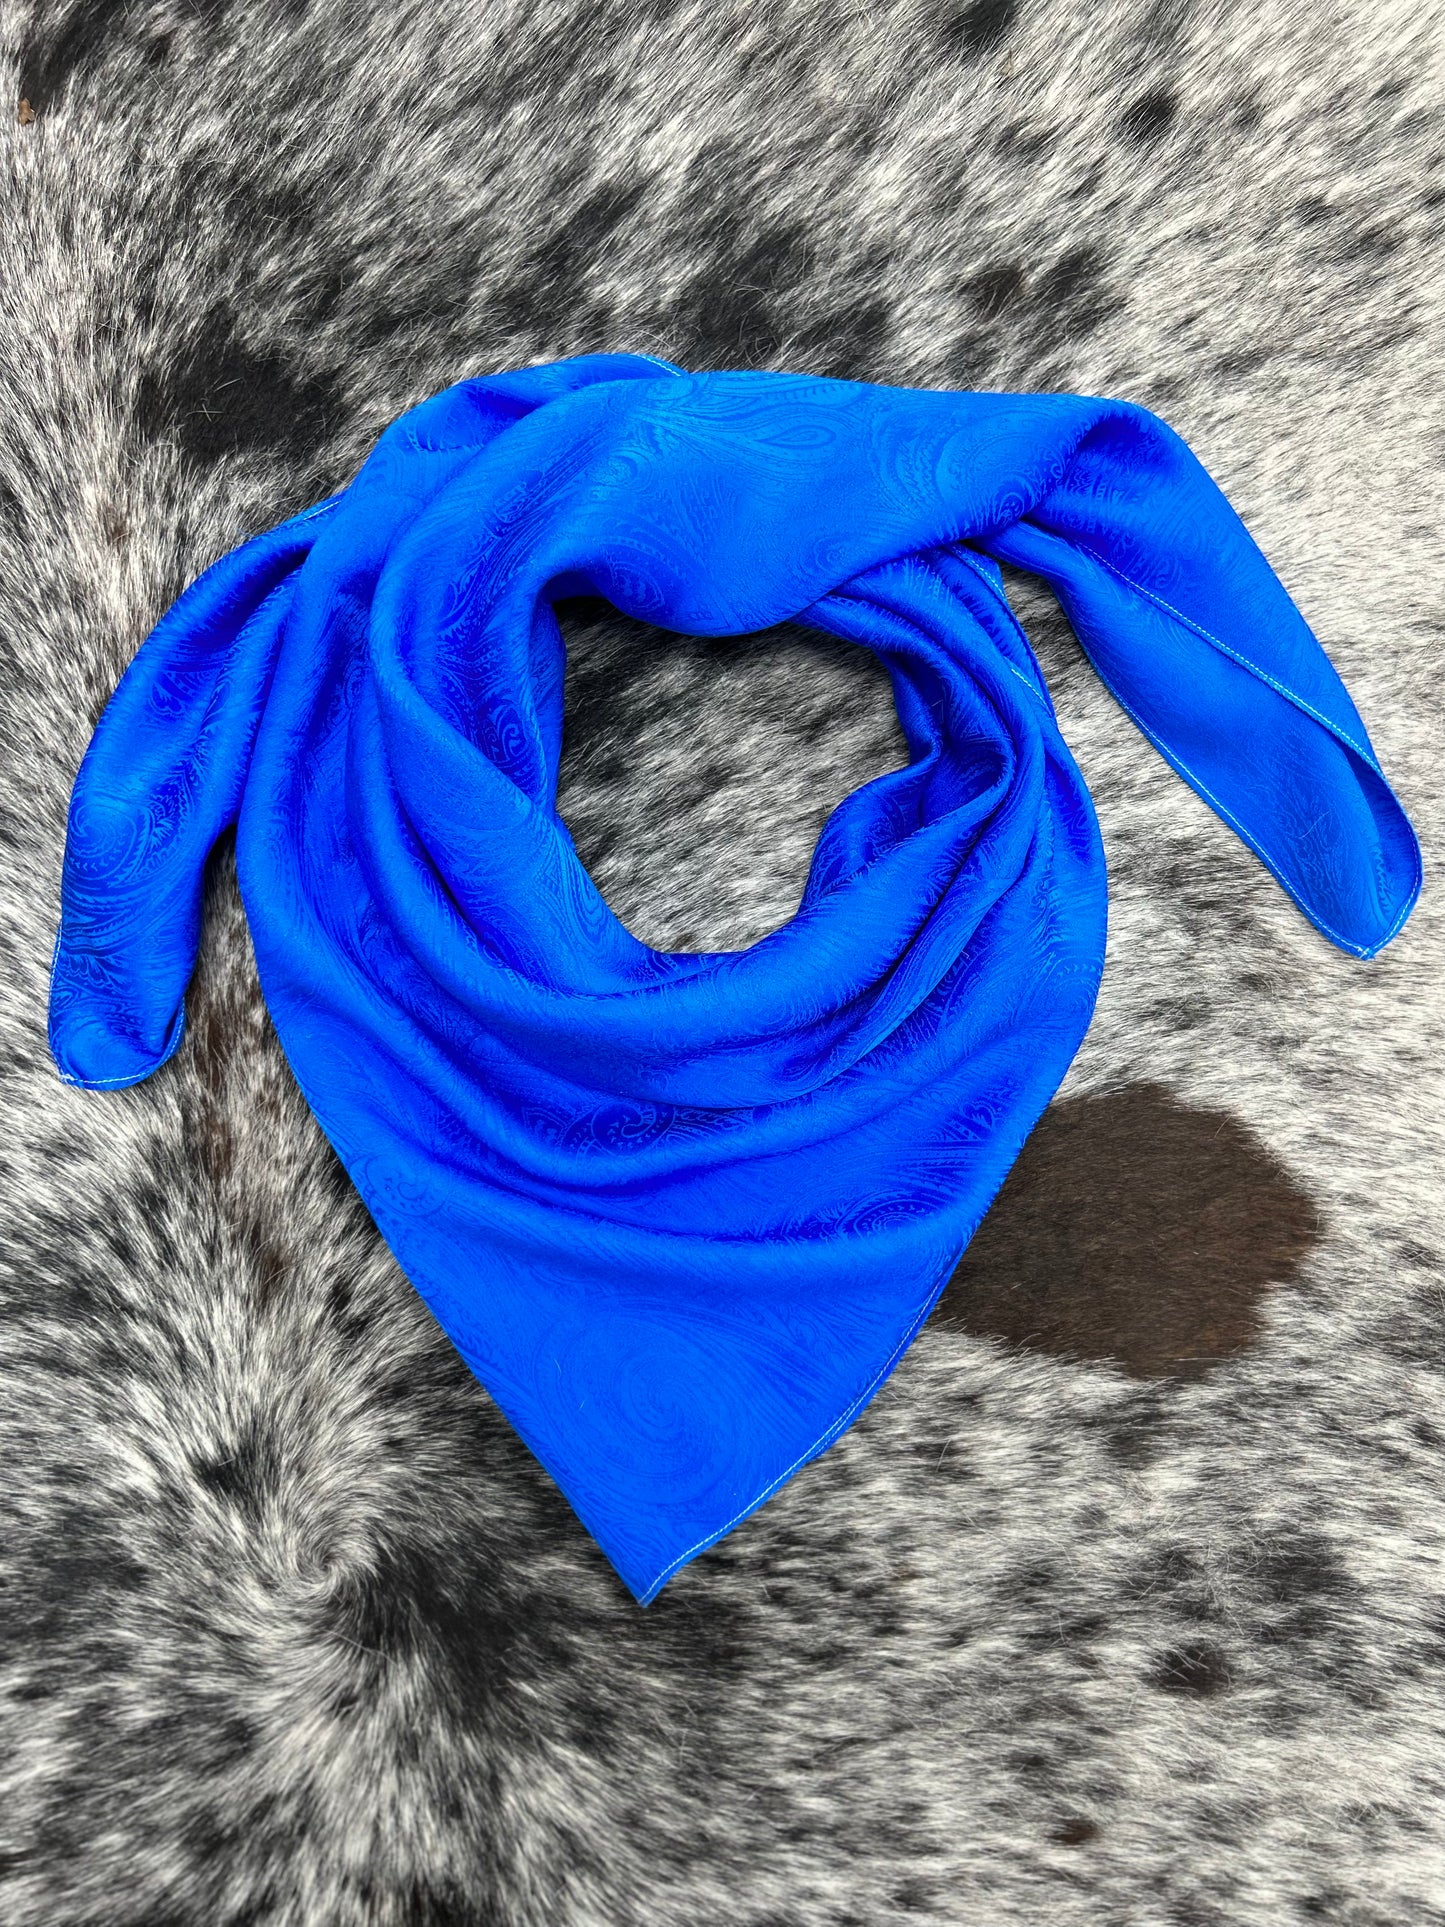 Jacquard Silk Wild Rag- “Atomic Blue”